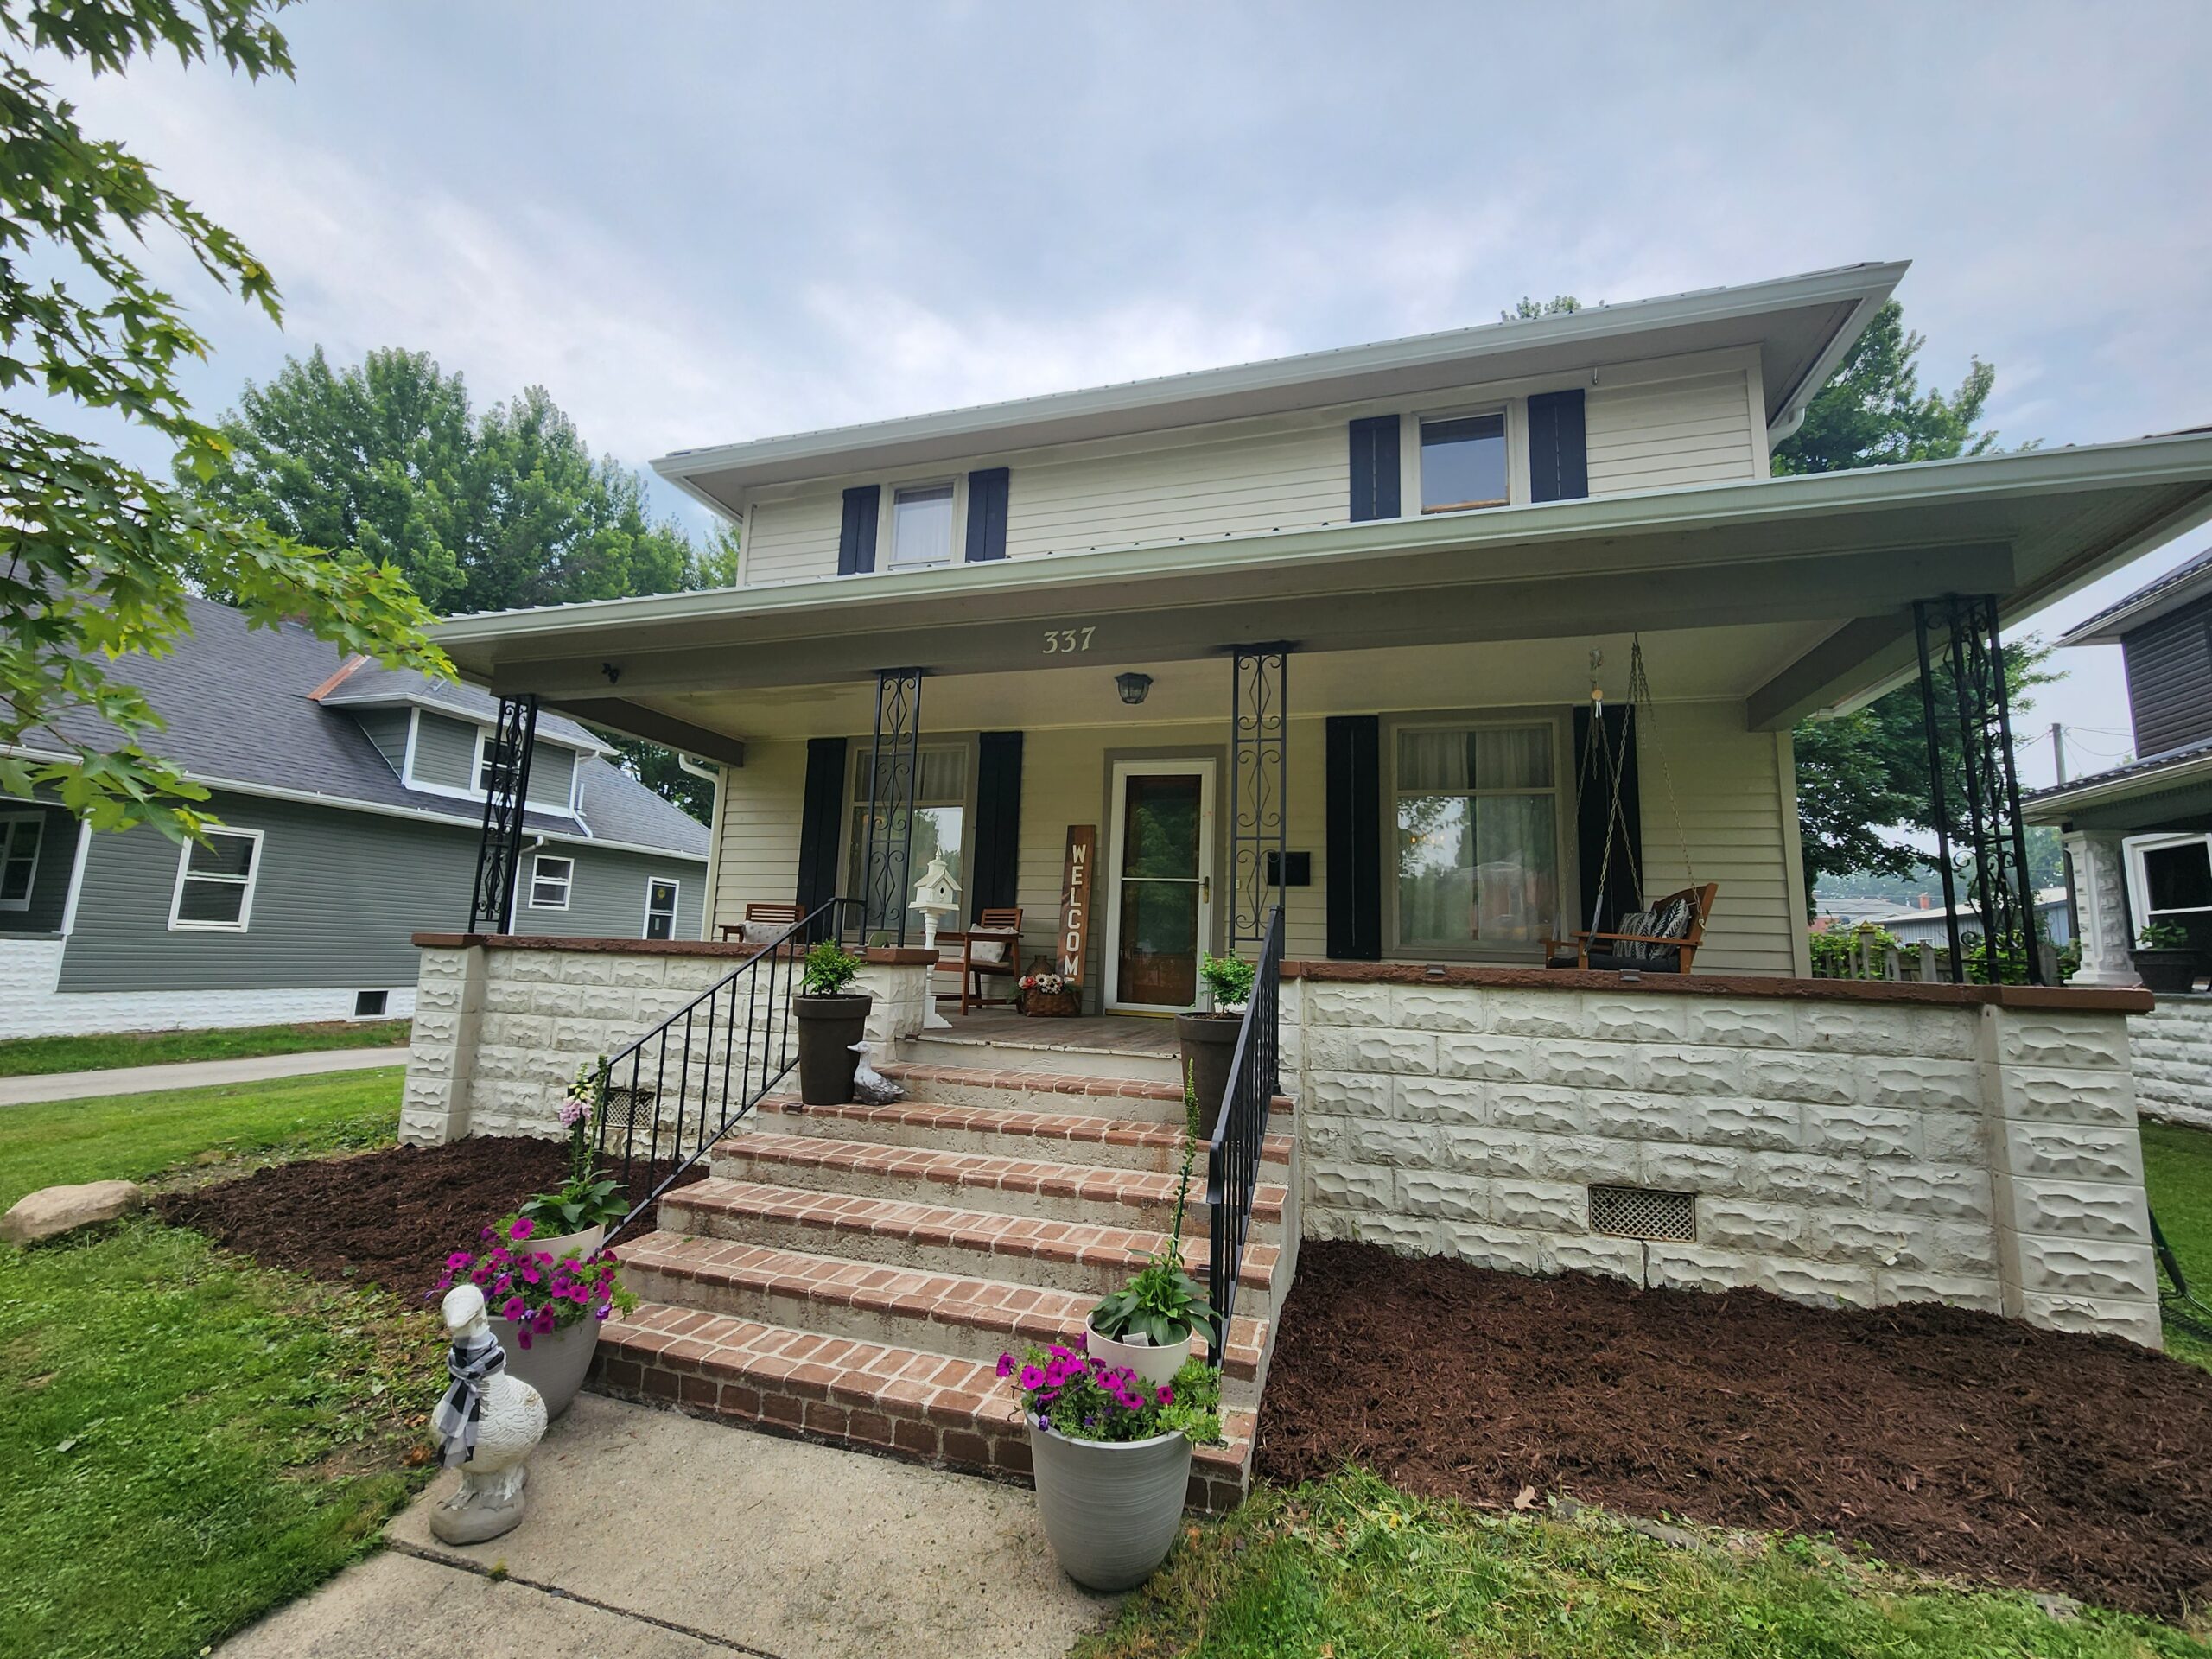 House for sale at 337 W Wyandot Avenue in Upper Sandusky, Ohio